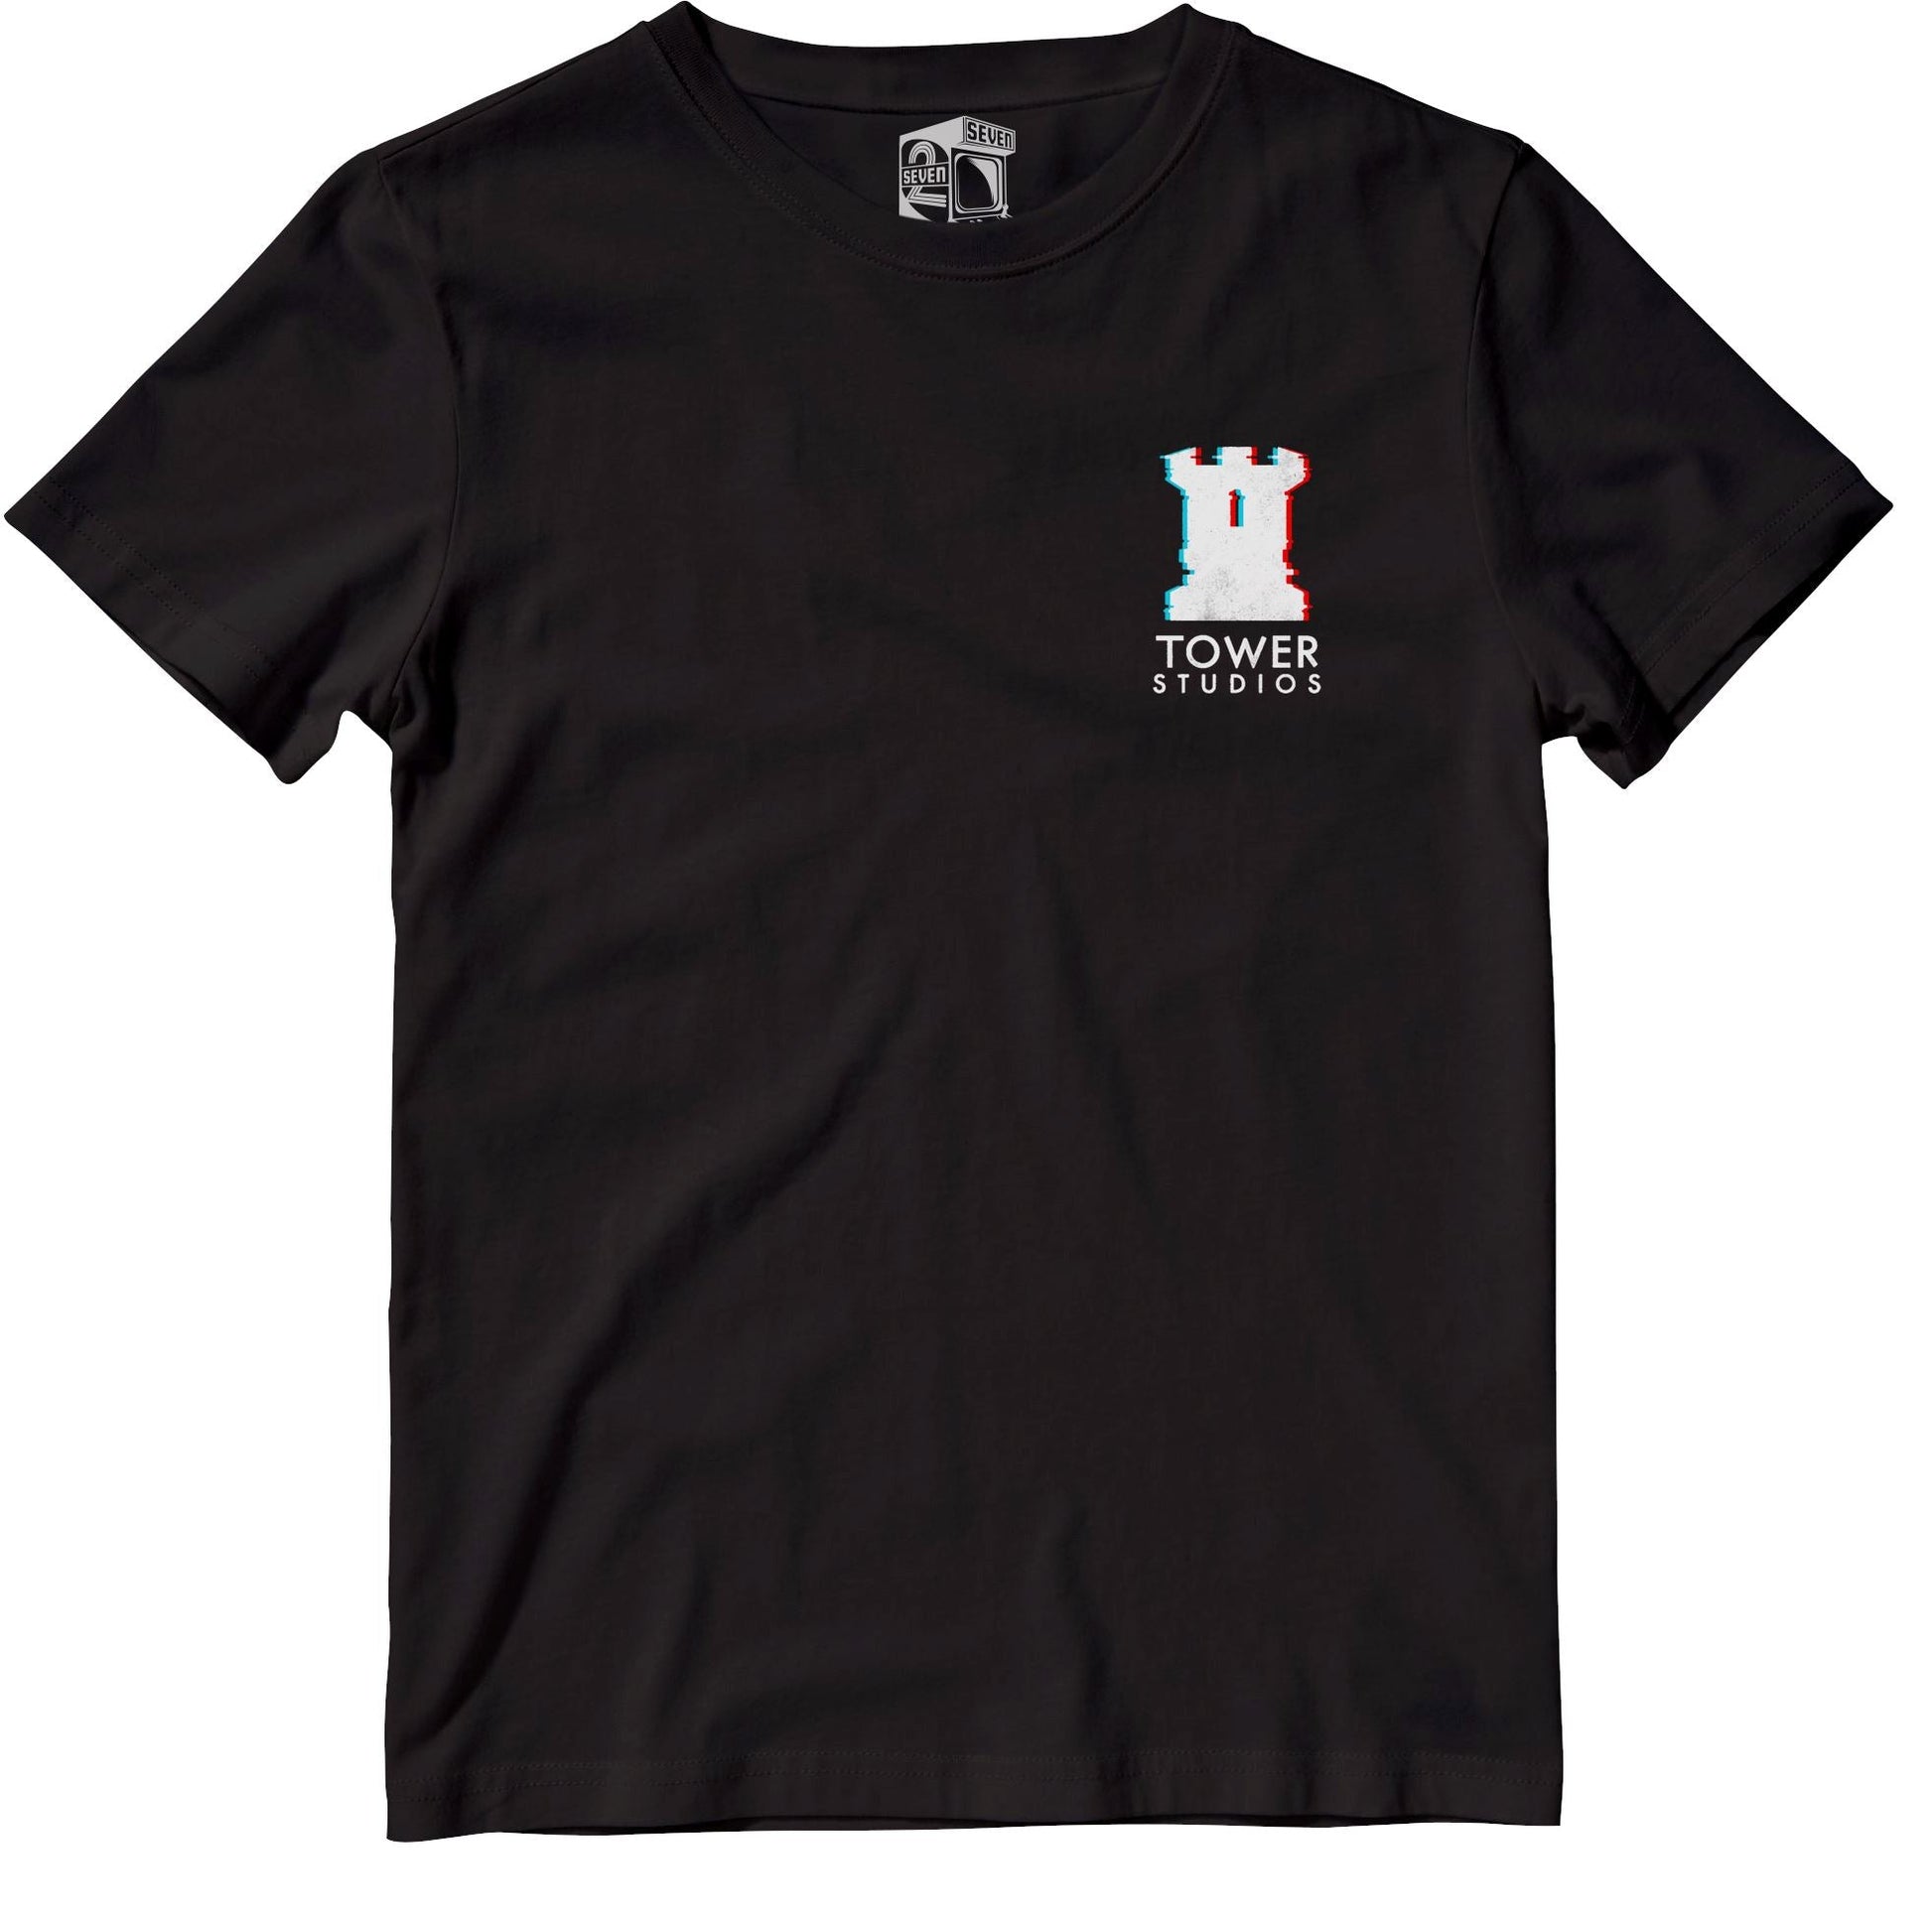 TOWER Studios (Pocket logo) Retro Gaming Kids T-Shirt Kids T-Shirt Seven Squared 3-4 Years Black 